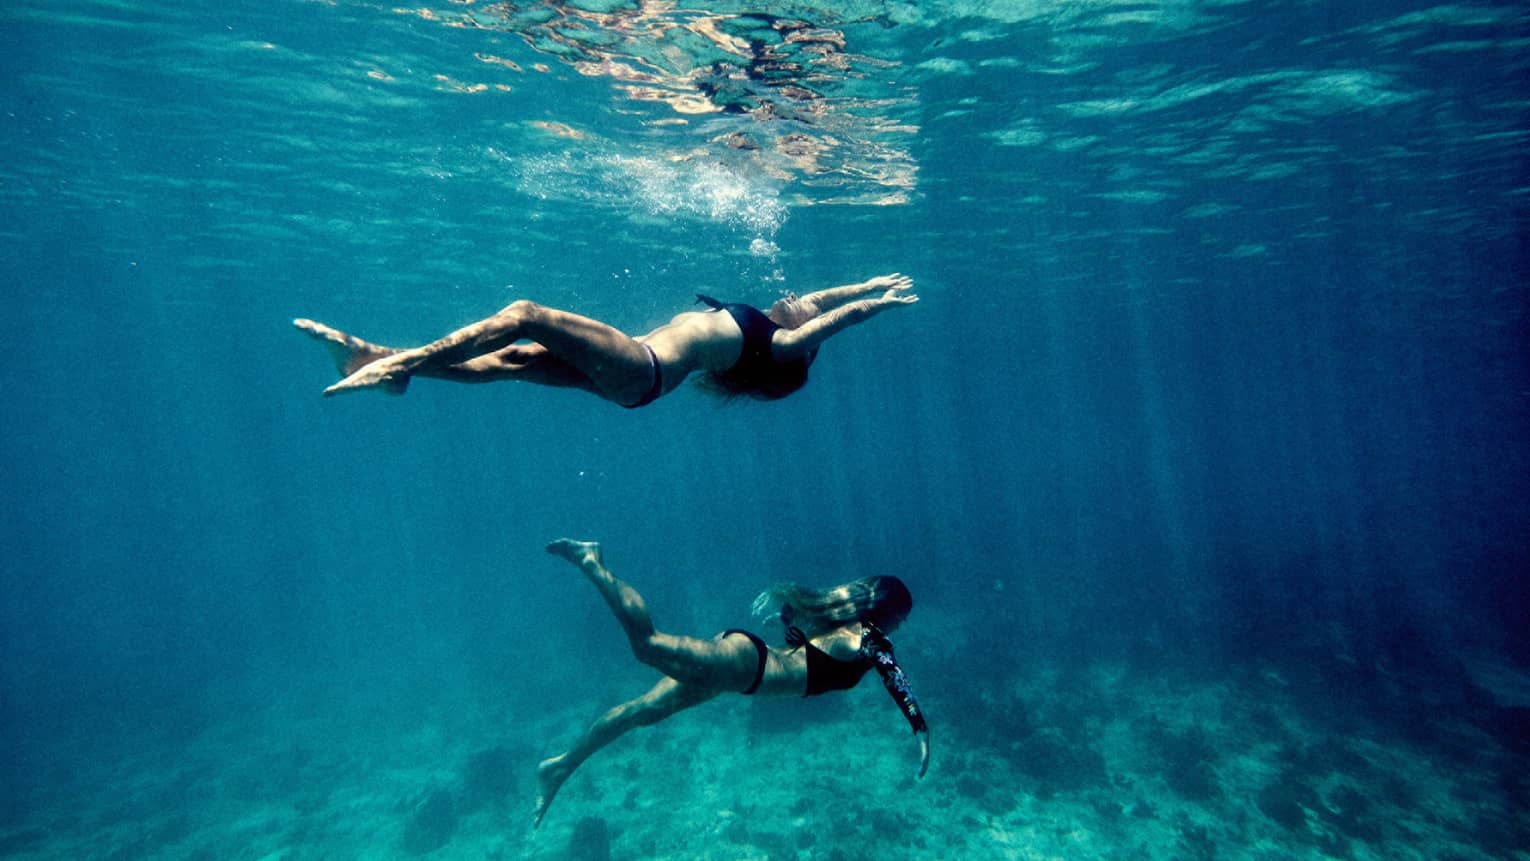 Underwater view of two women swimming in ocean